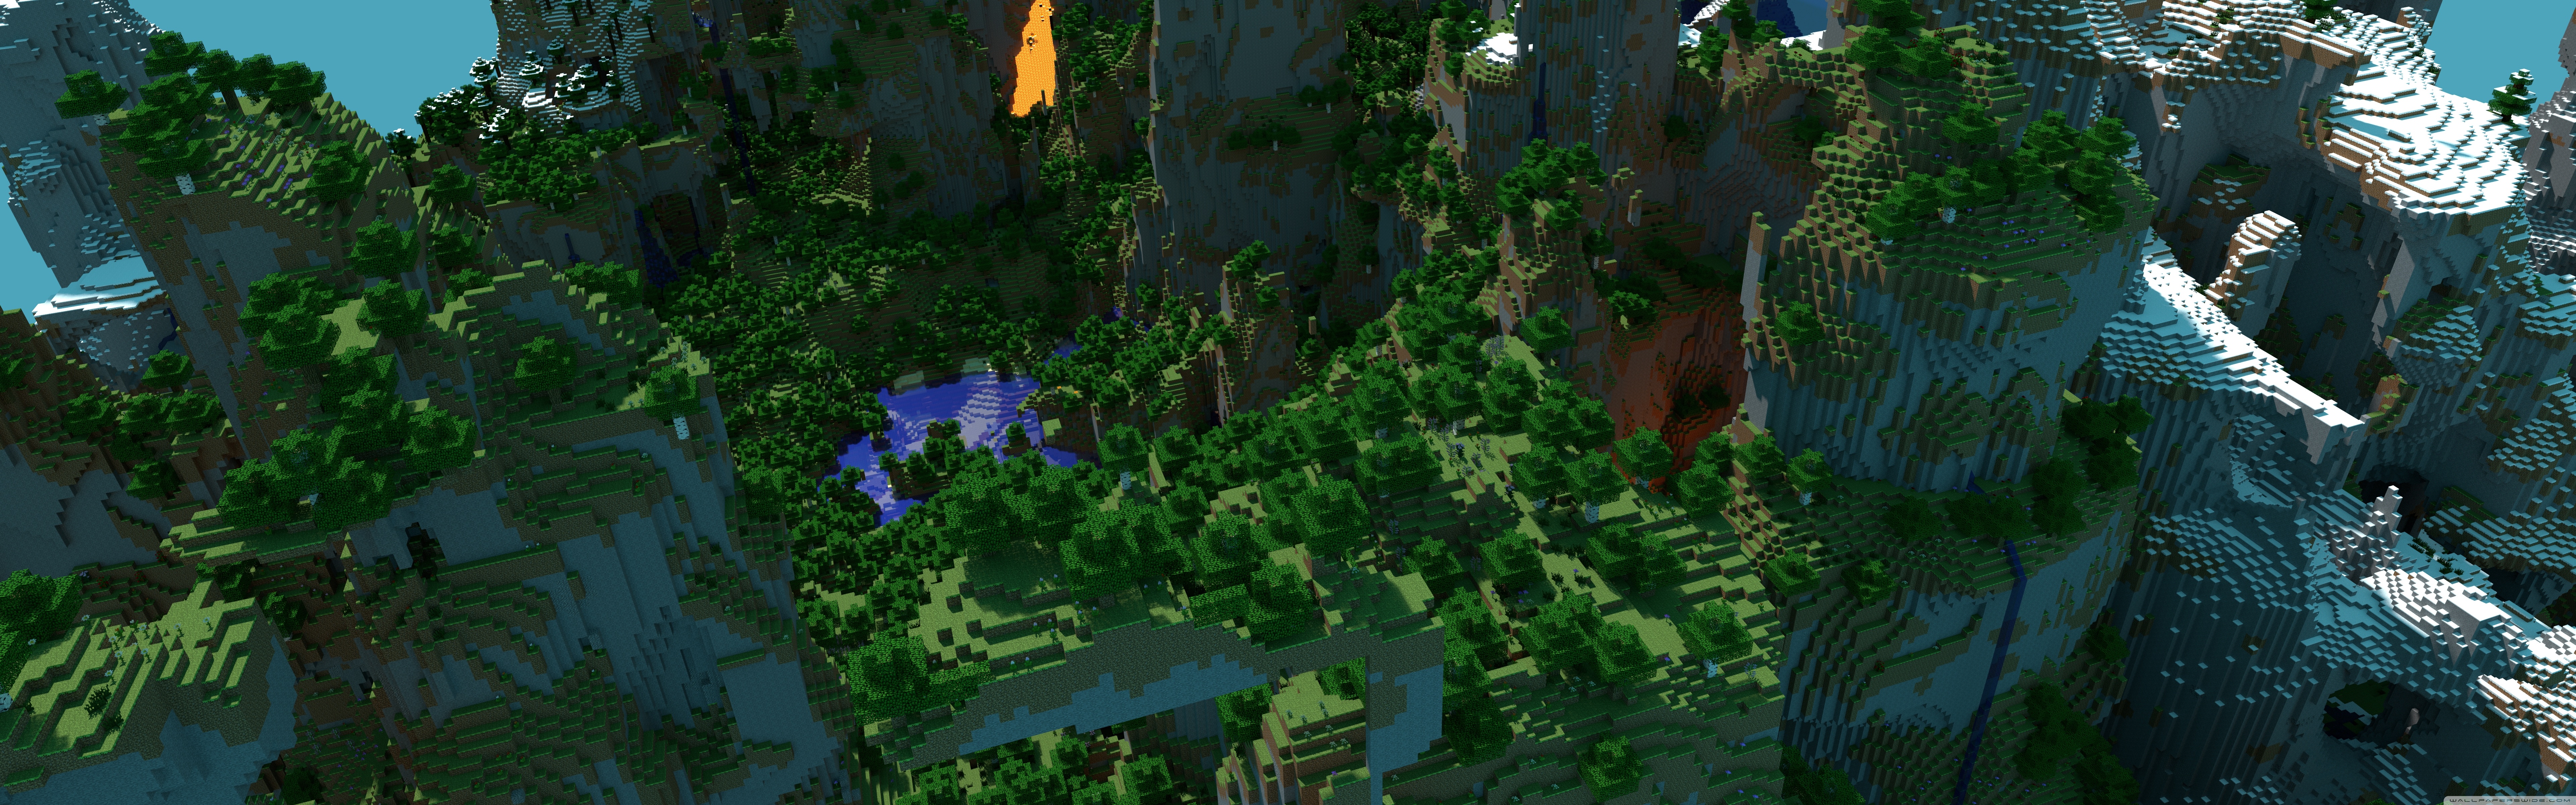 Minecraft Landscape Ultra HD Desktop Background Wallpaper For